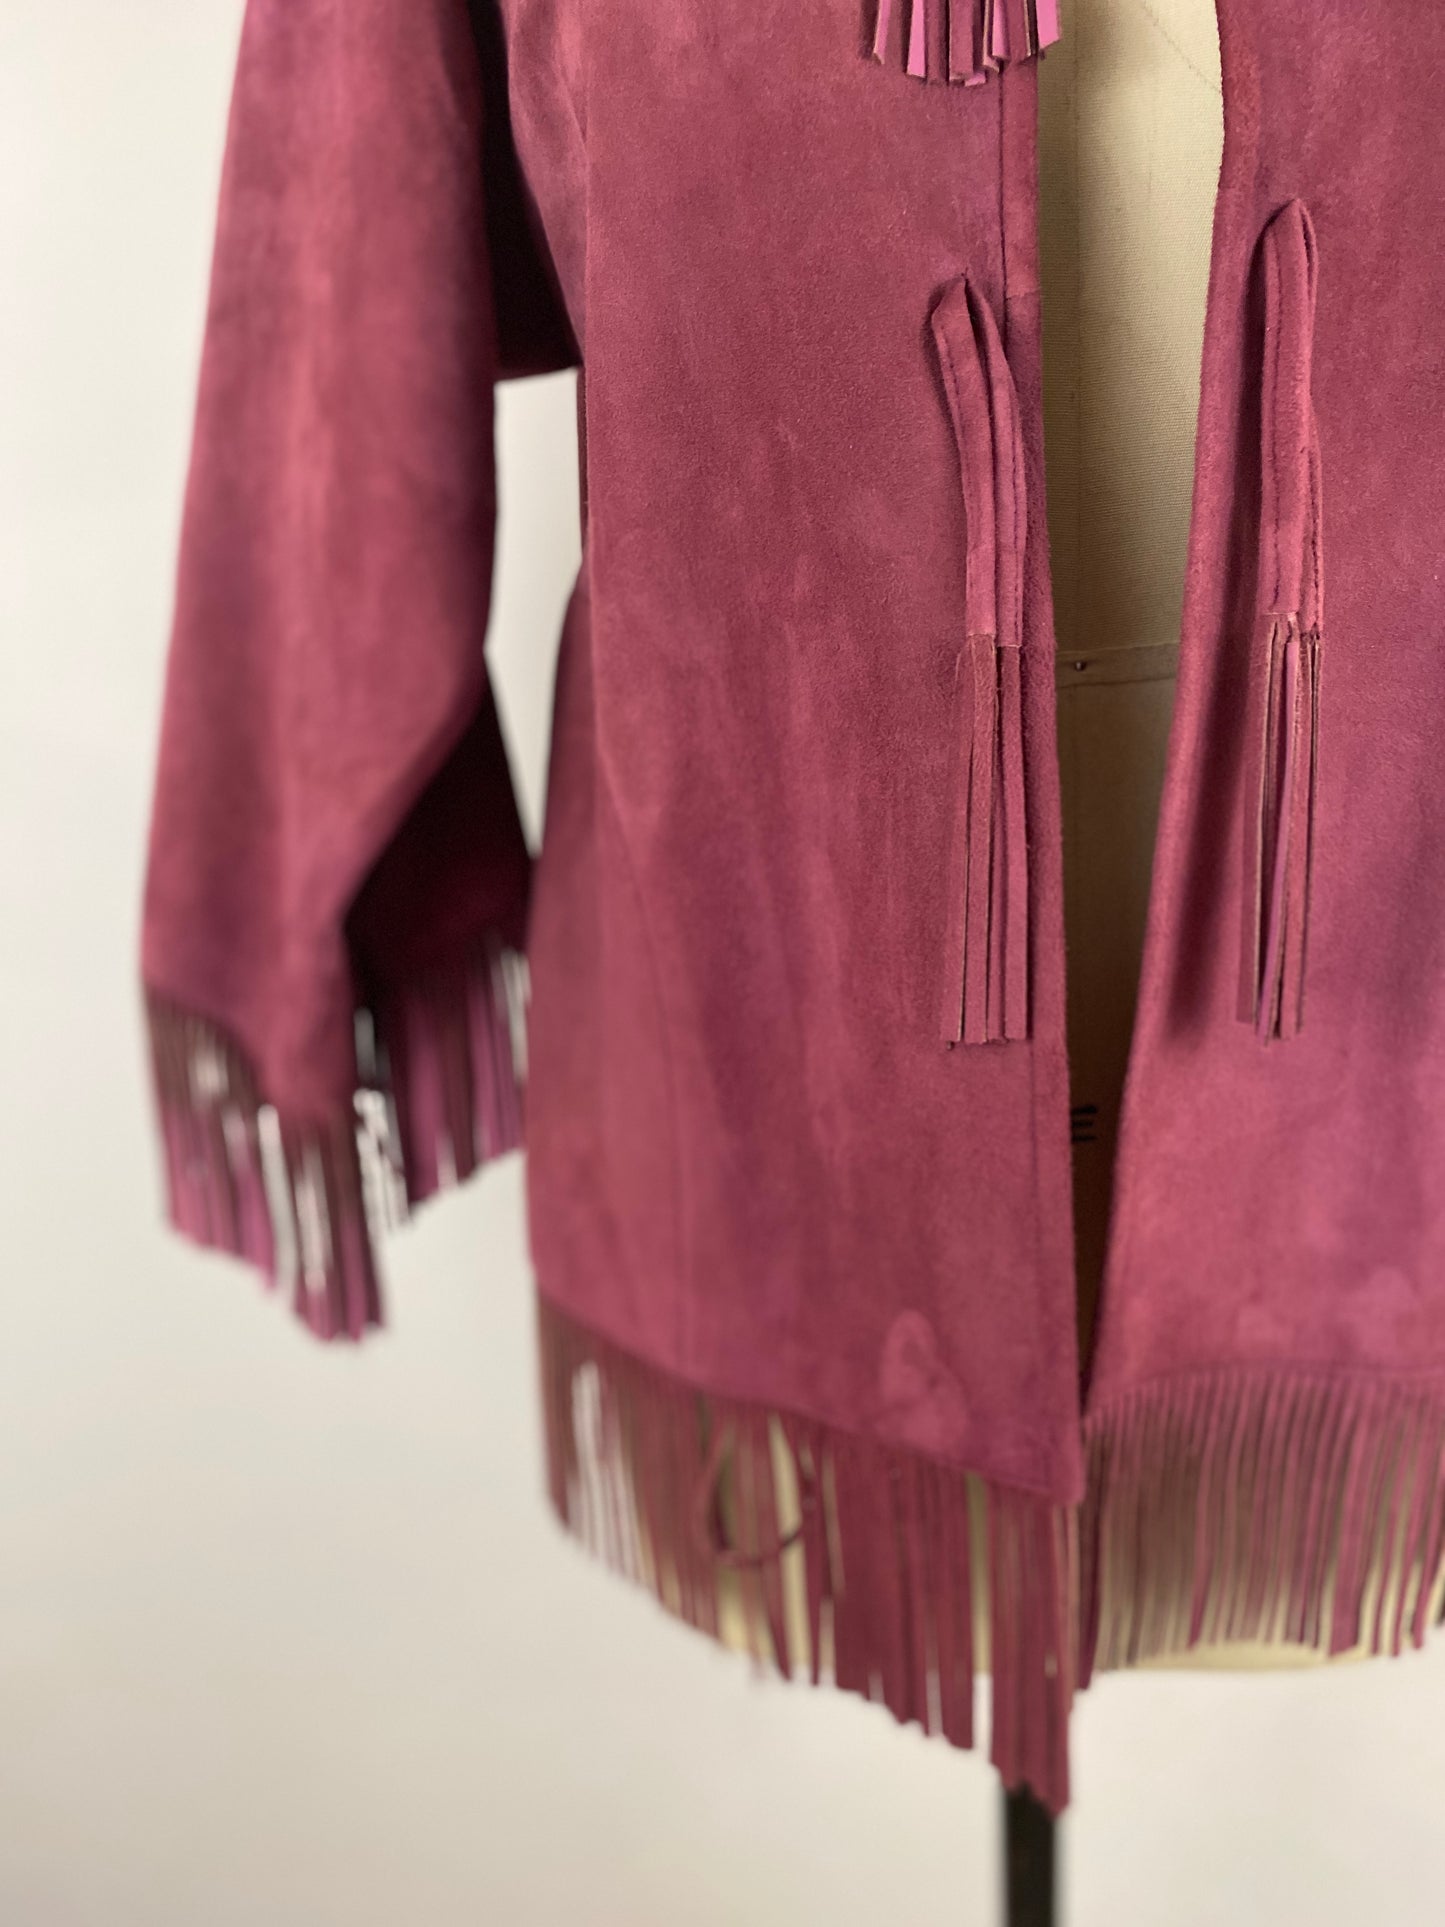 1960s Bonnie Cashin Sills Magenta Purple Suede Fringe Jacket Coach Designer Rare / Size Small